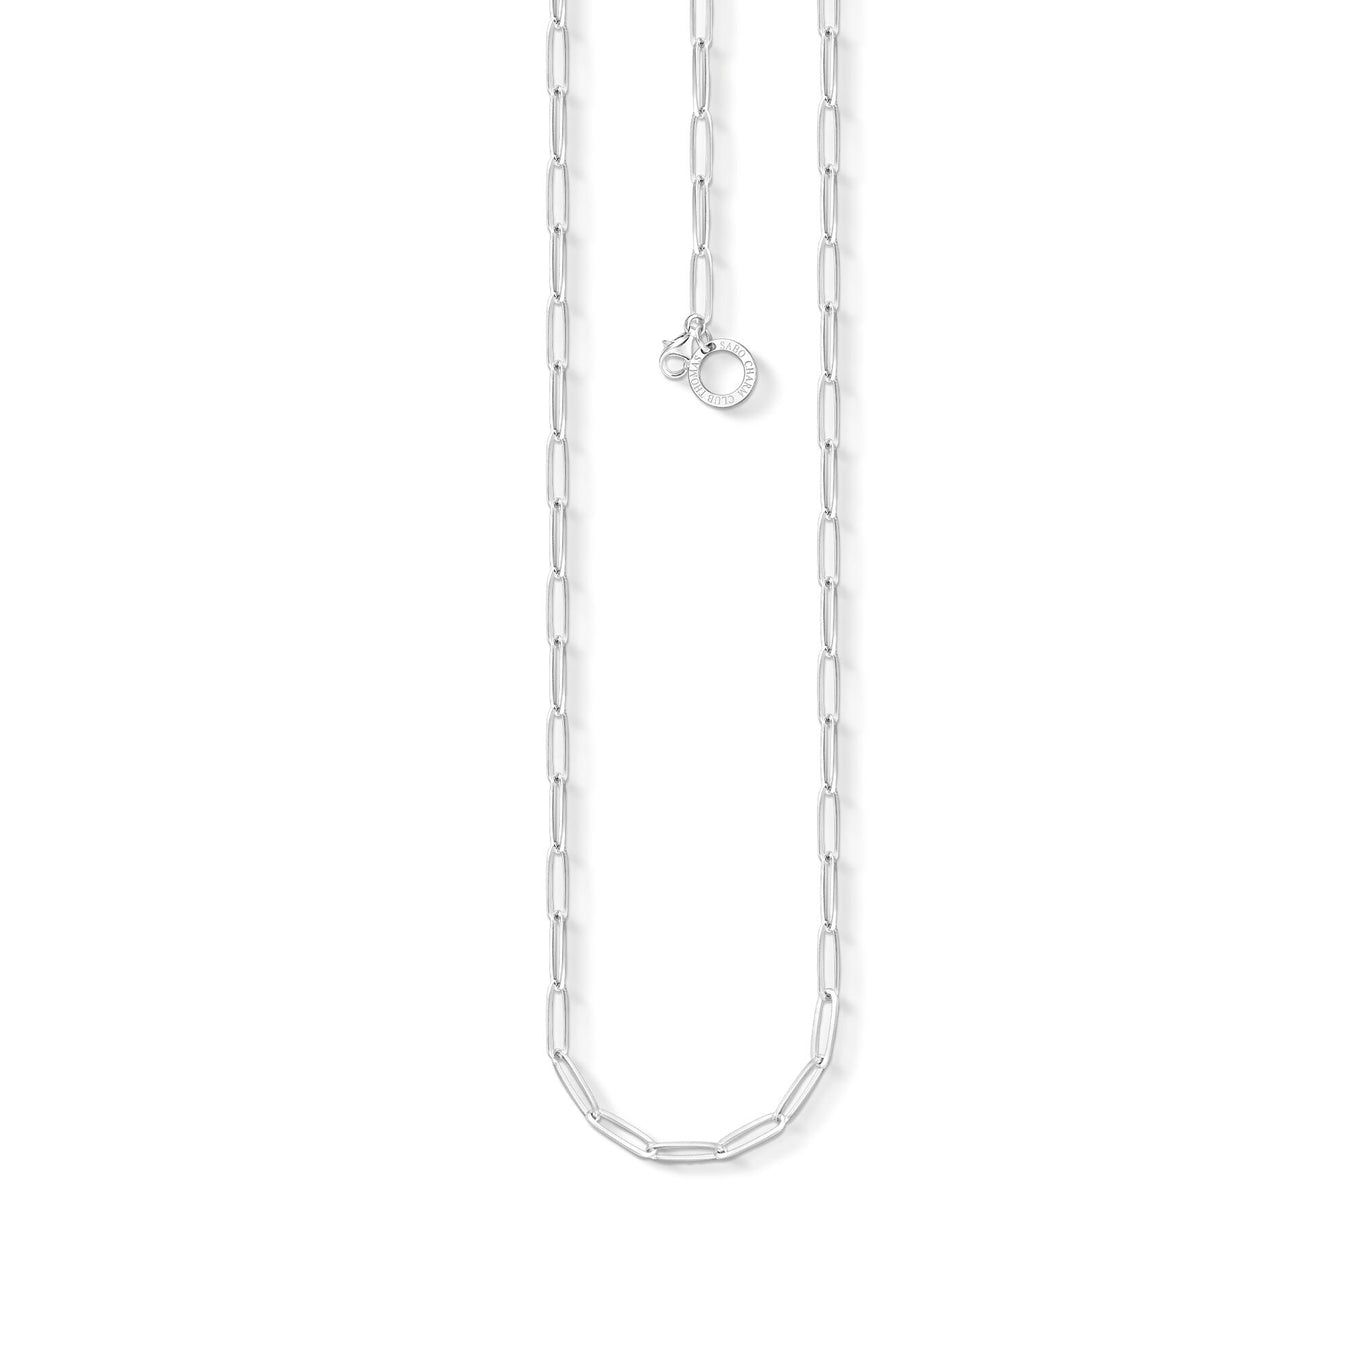 Thomas Sabo Silver Charm Necklace